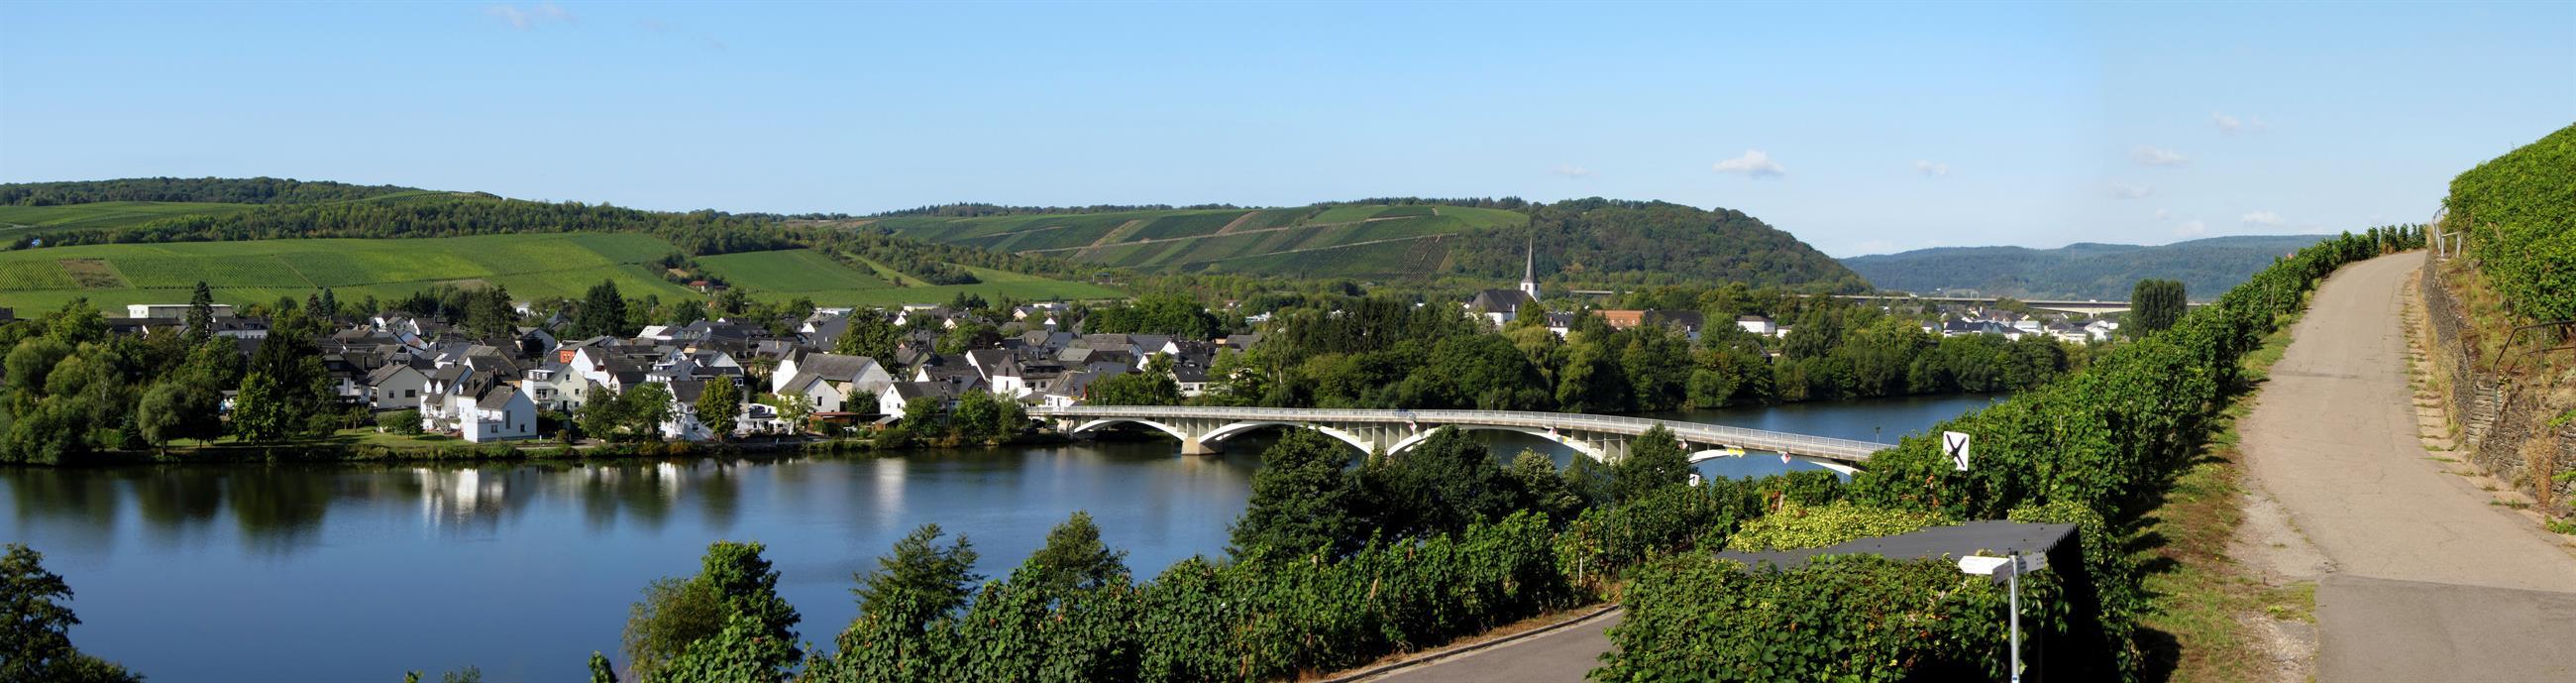 Panorama Ortsgemeinde Longuich